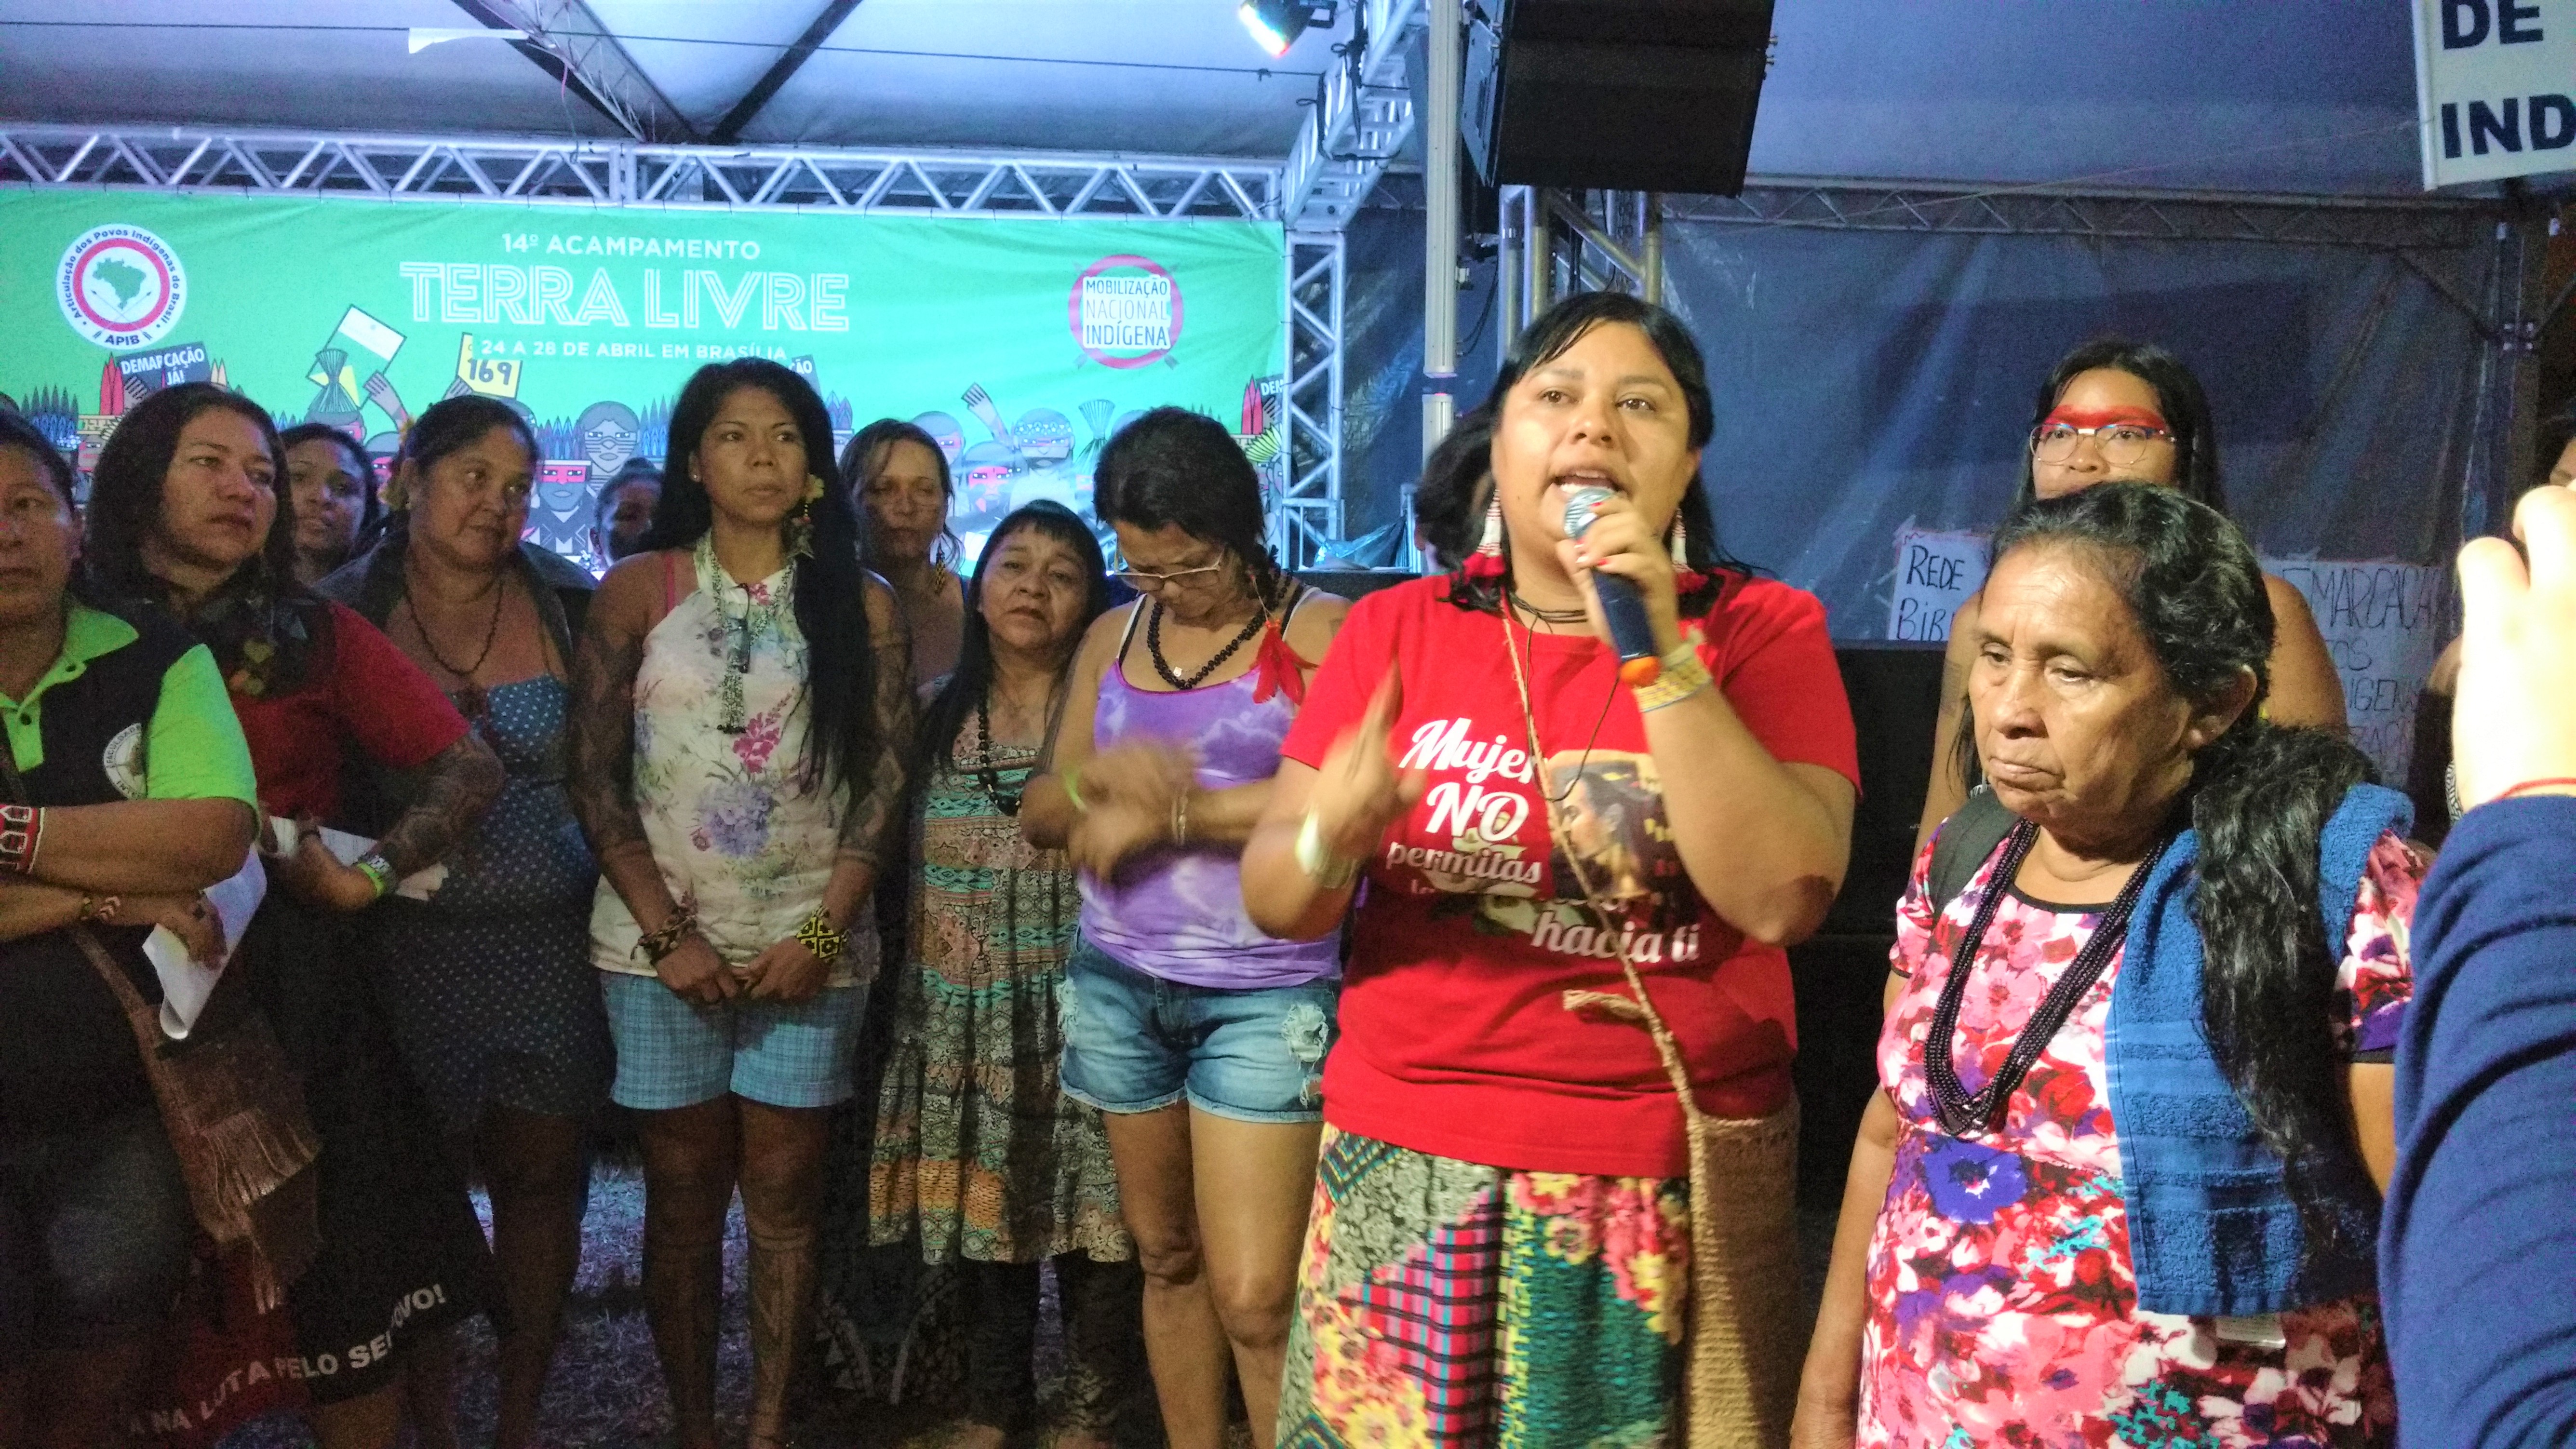 A voz das mulheres indígenas no Acampamento Terra Livre/